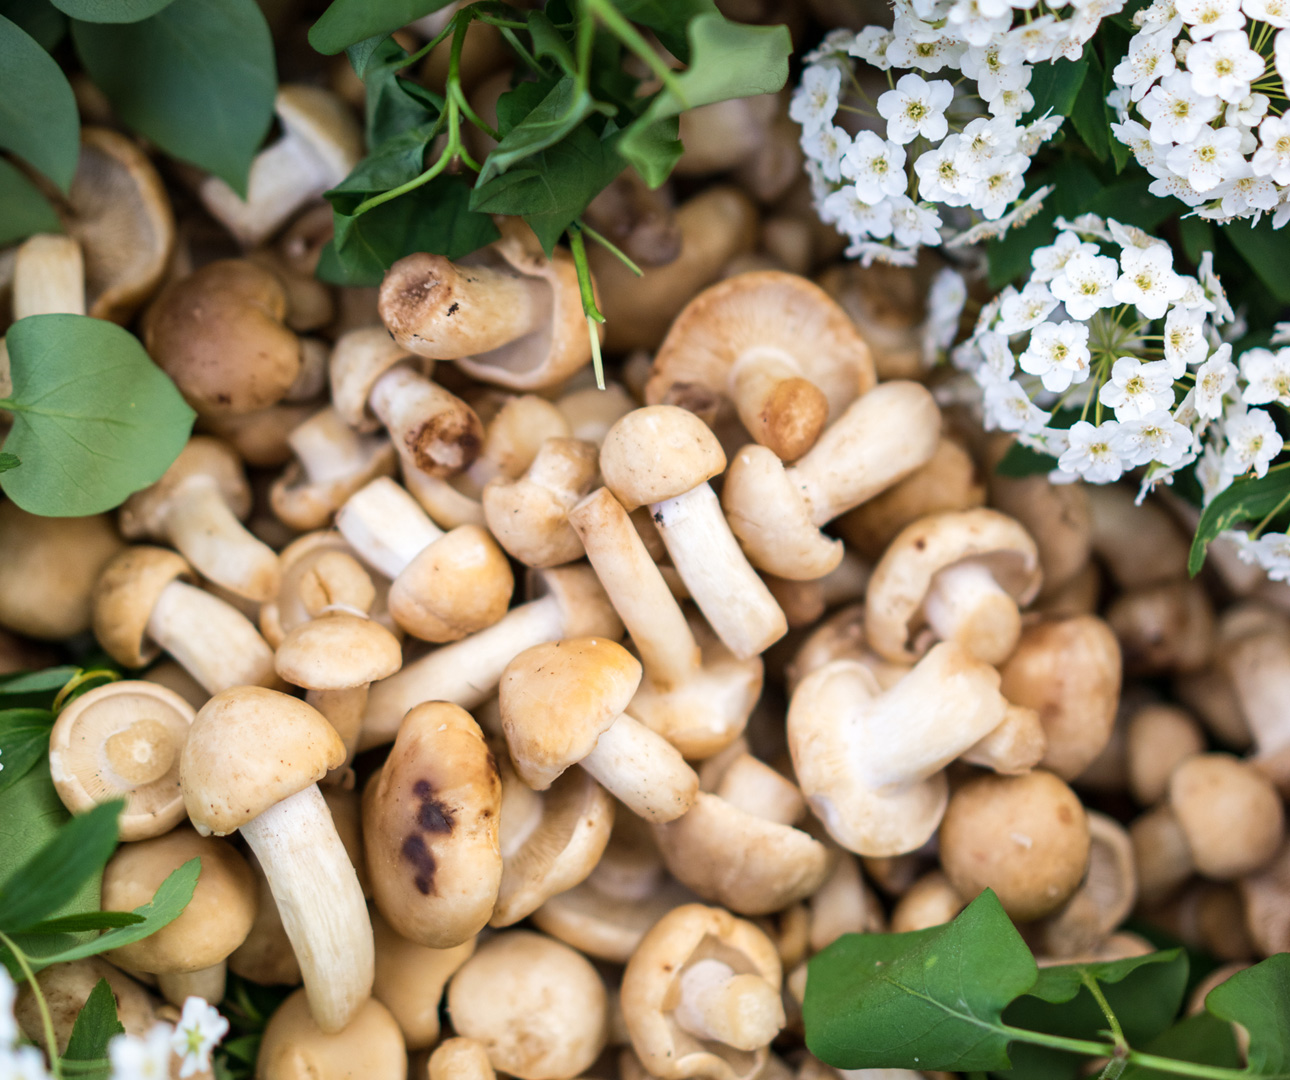 glimpse into the secret world of mushrooms